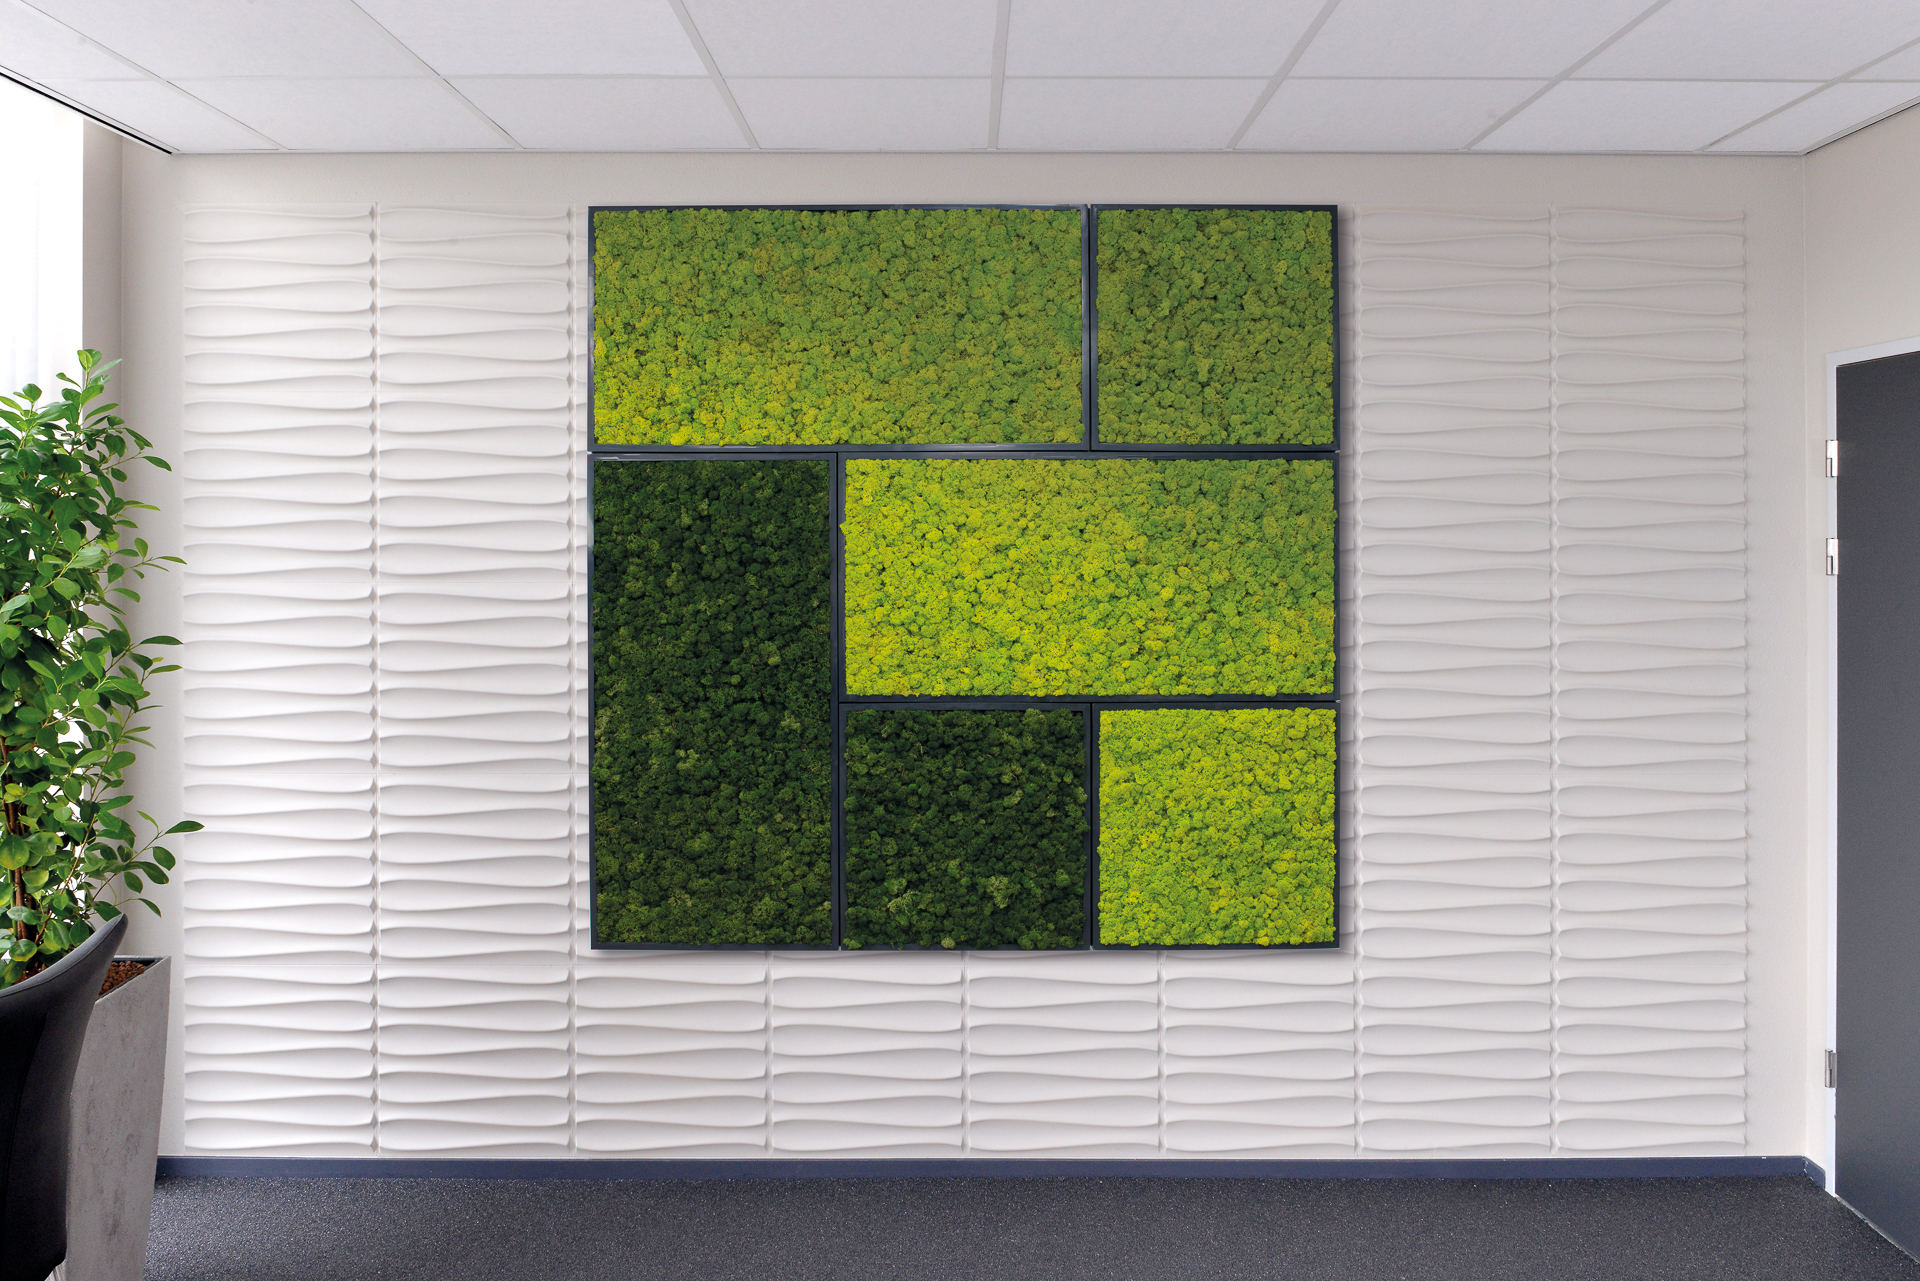 12 x 24 Moss Wall Art Panel Kit - Botanicus Green